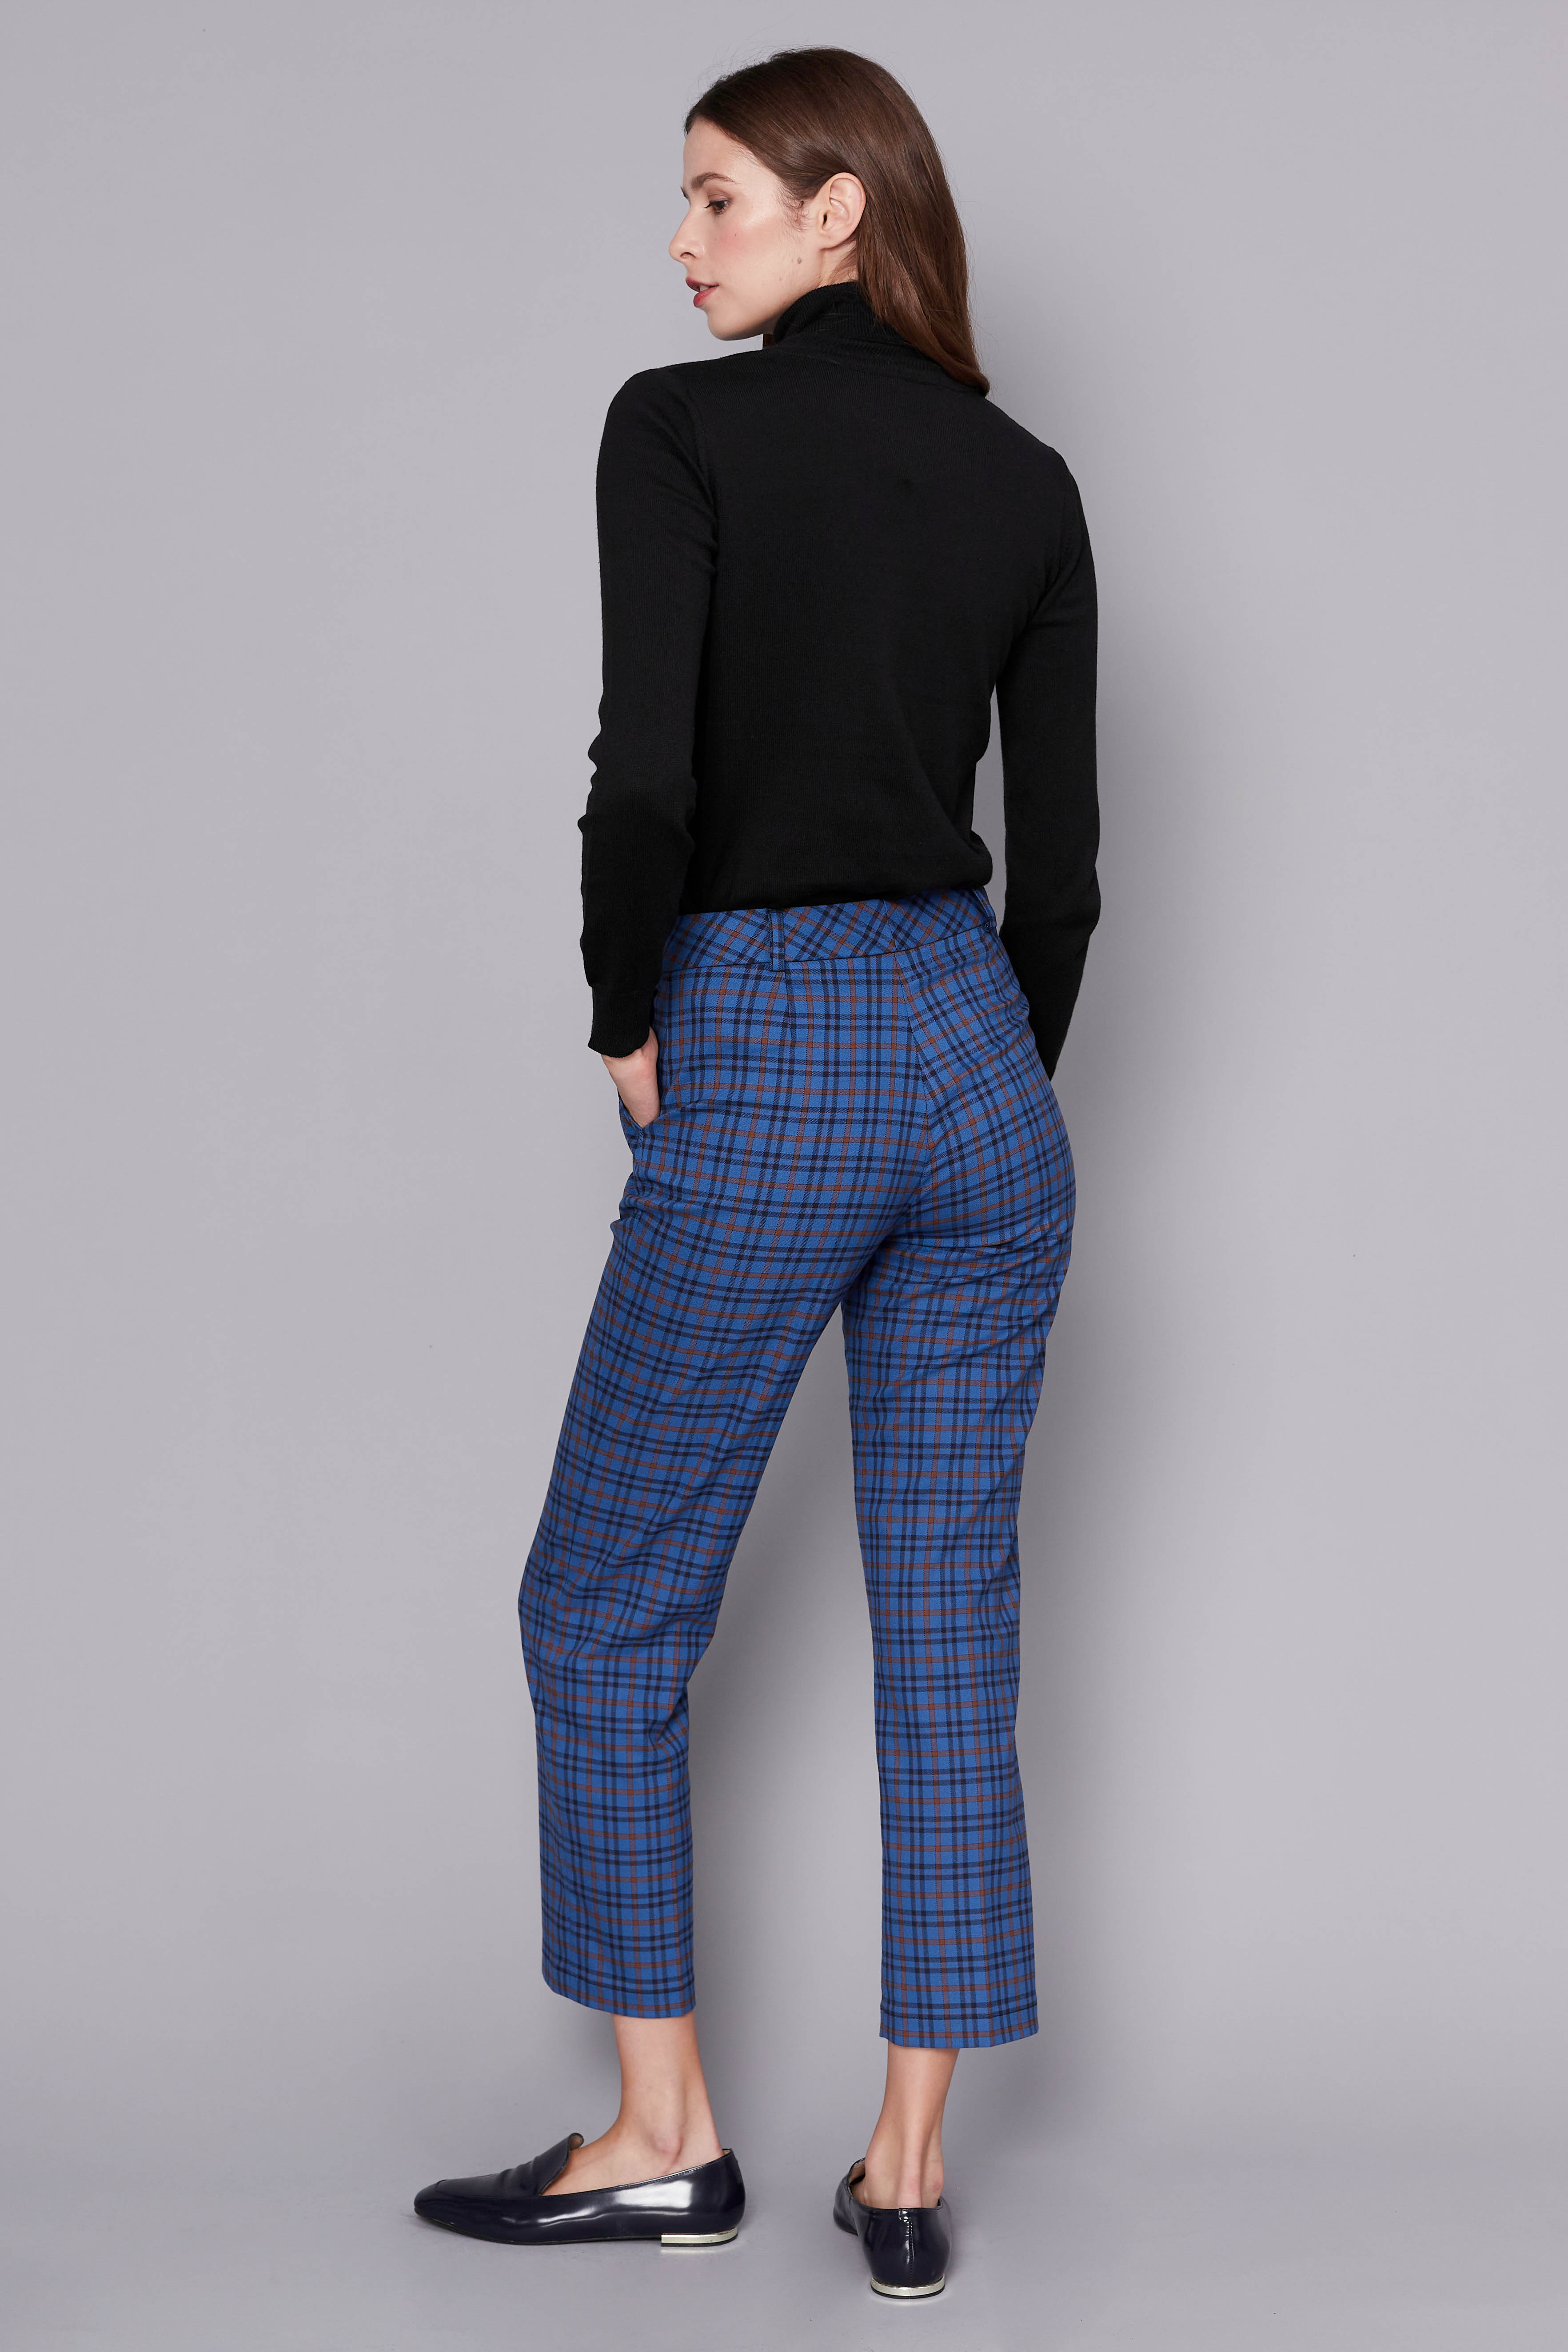 Blue checkered pants, photo 3